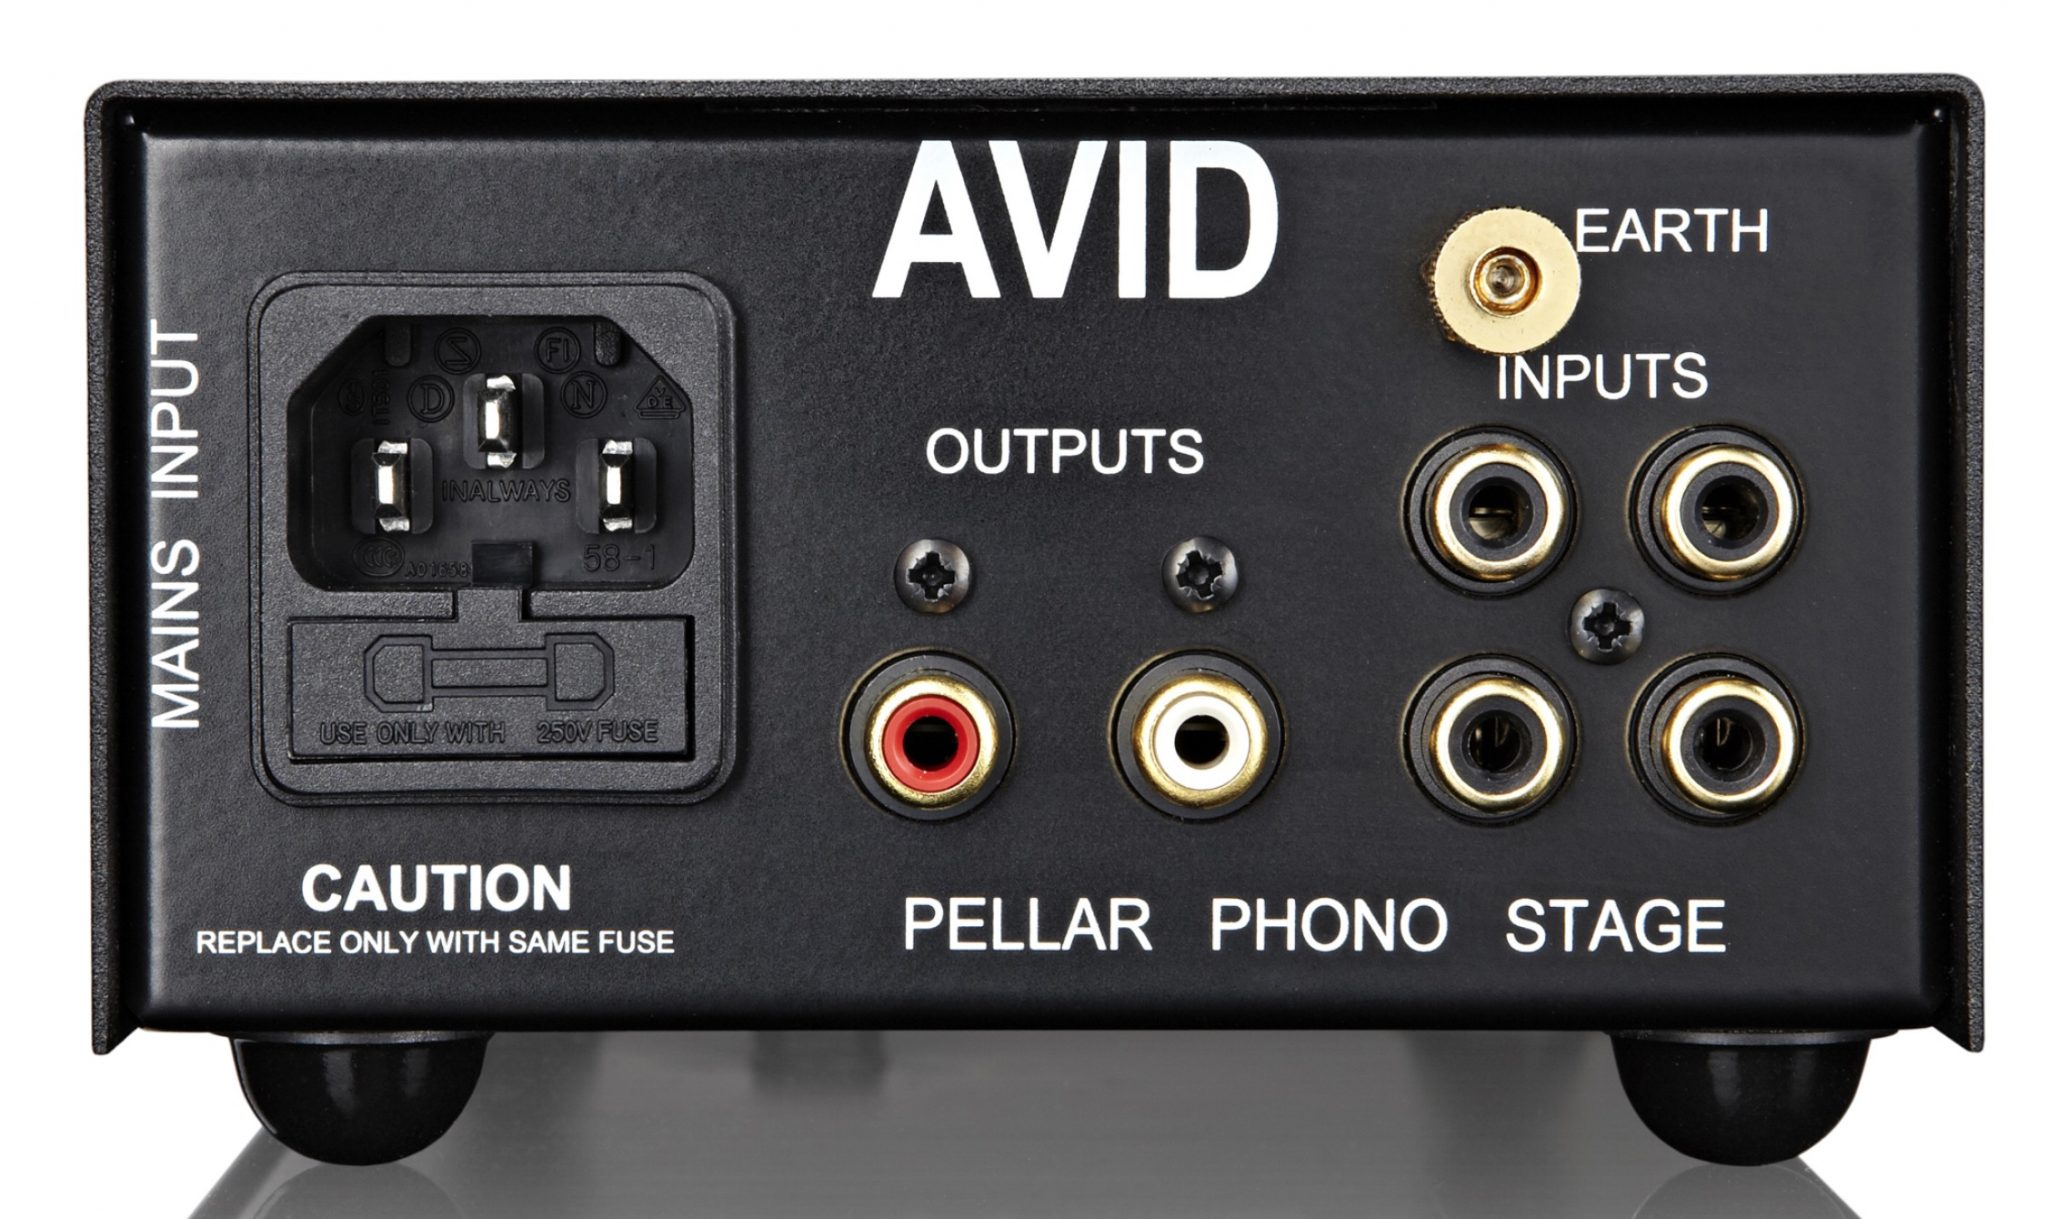 Pellar from AVID HiFi: A Low Cost Phono Amplifier